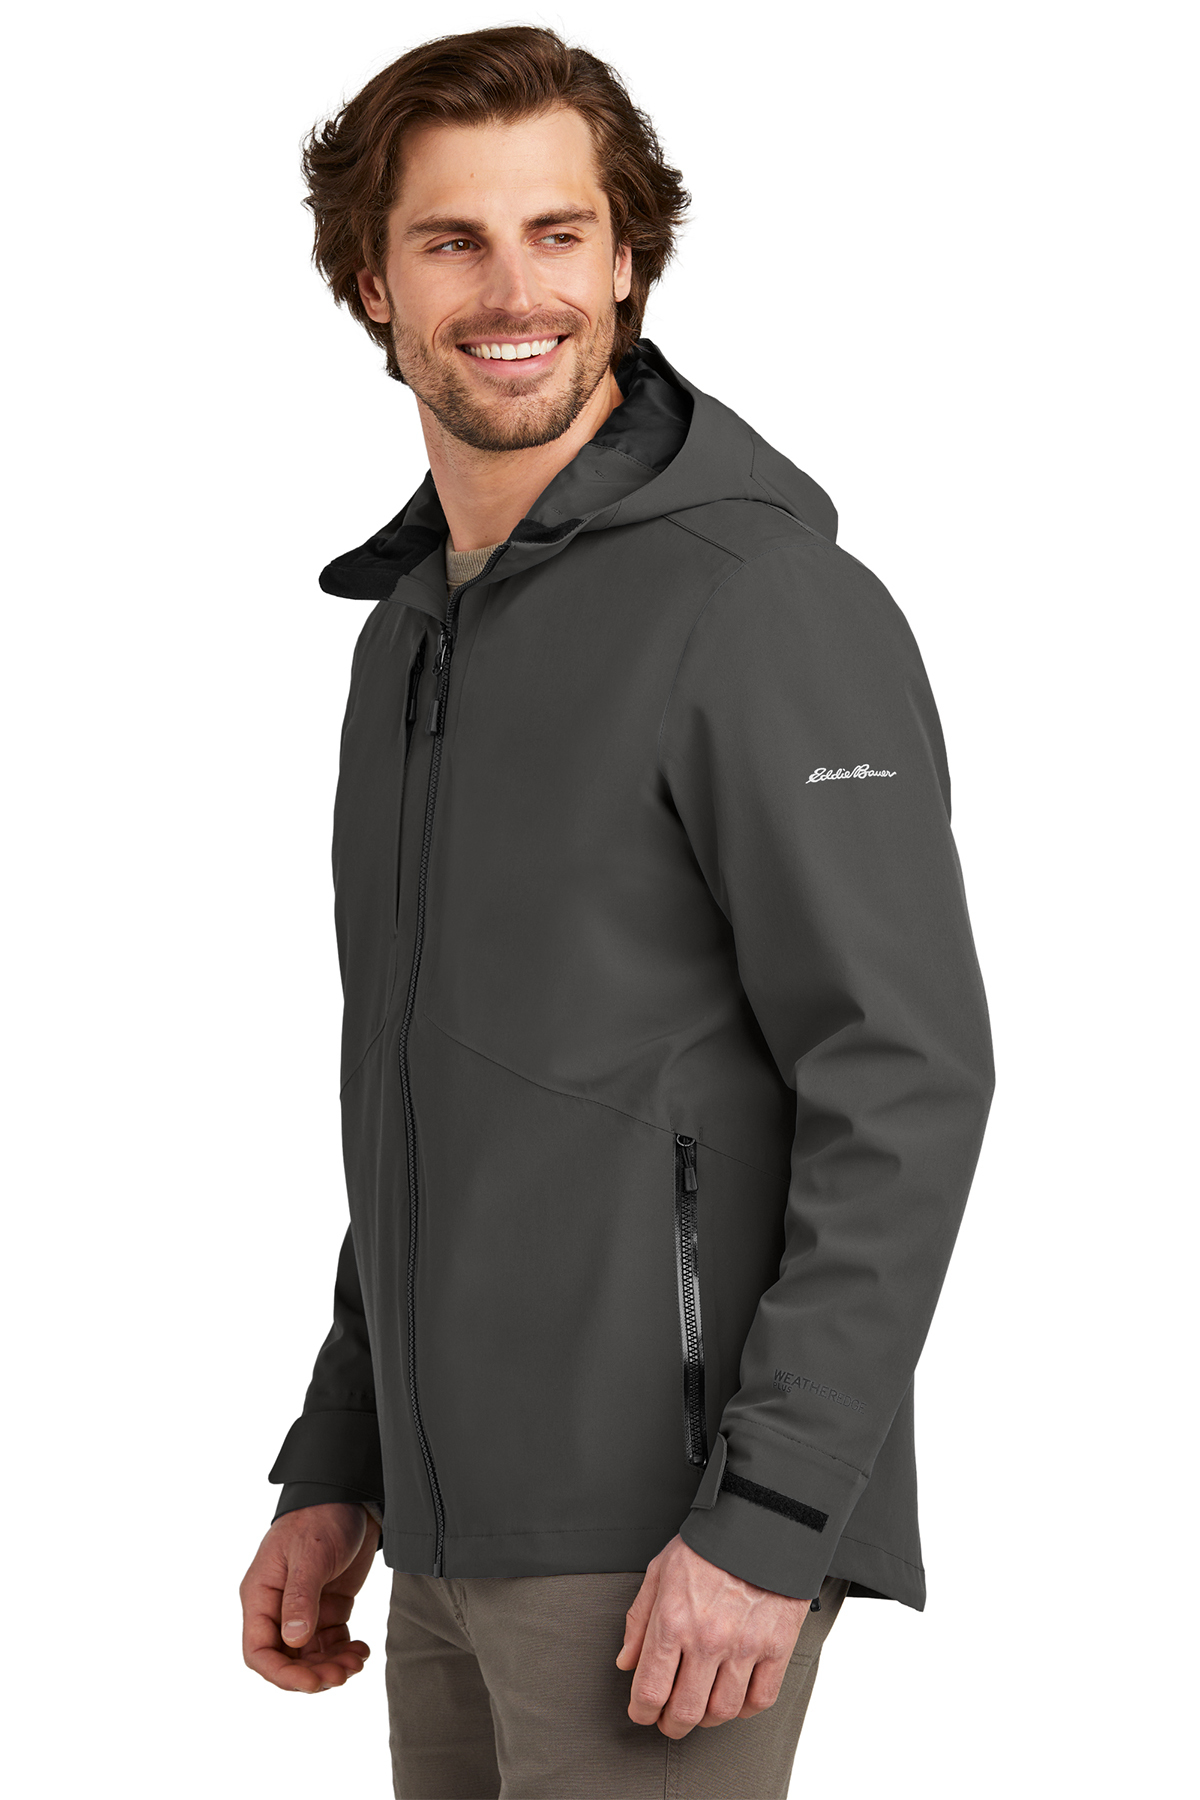 Eddie Bauer WeatherEdge Plus Jacket | Product | SanMar